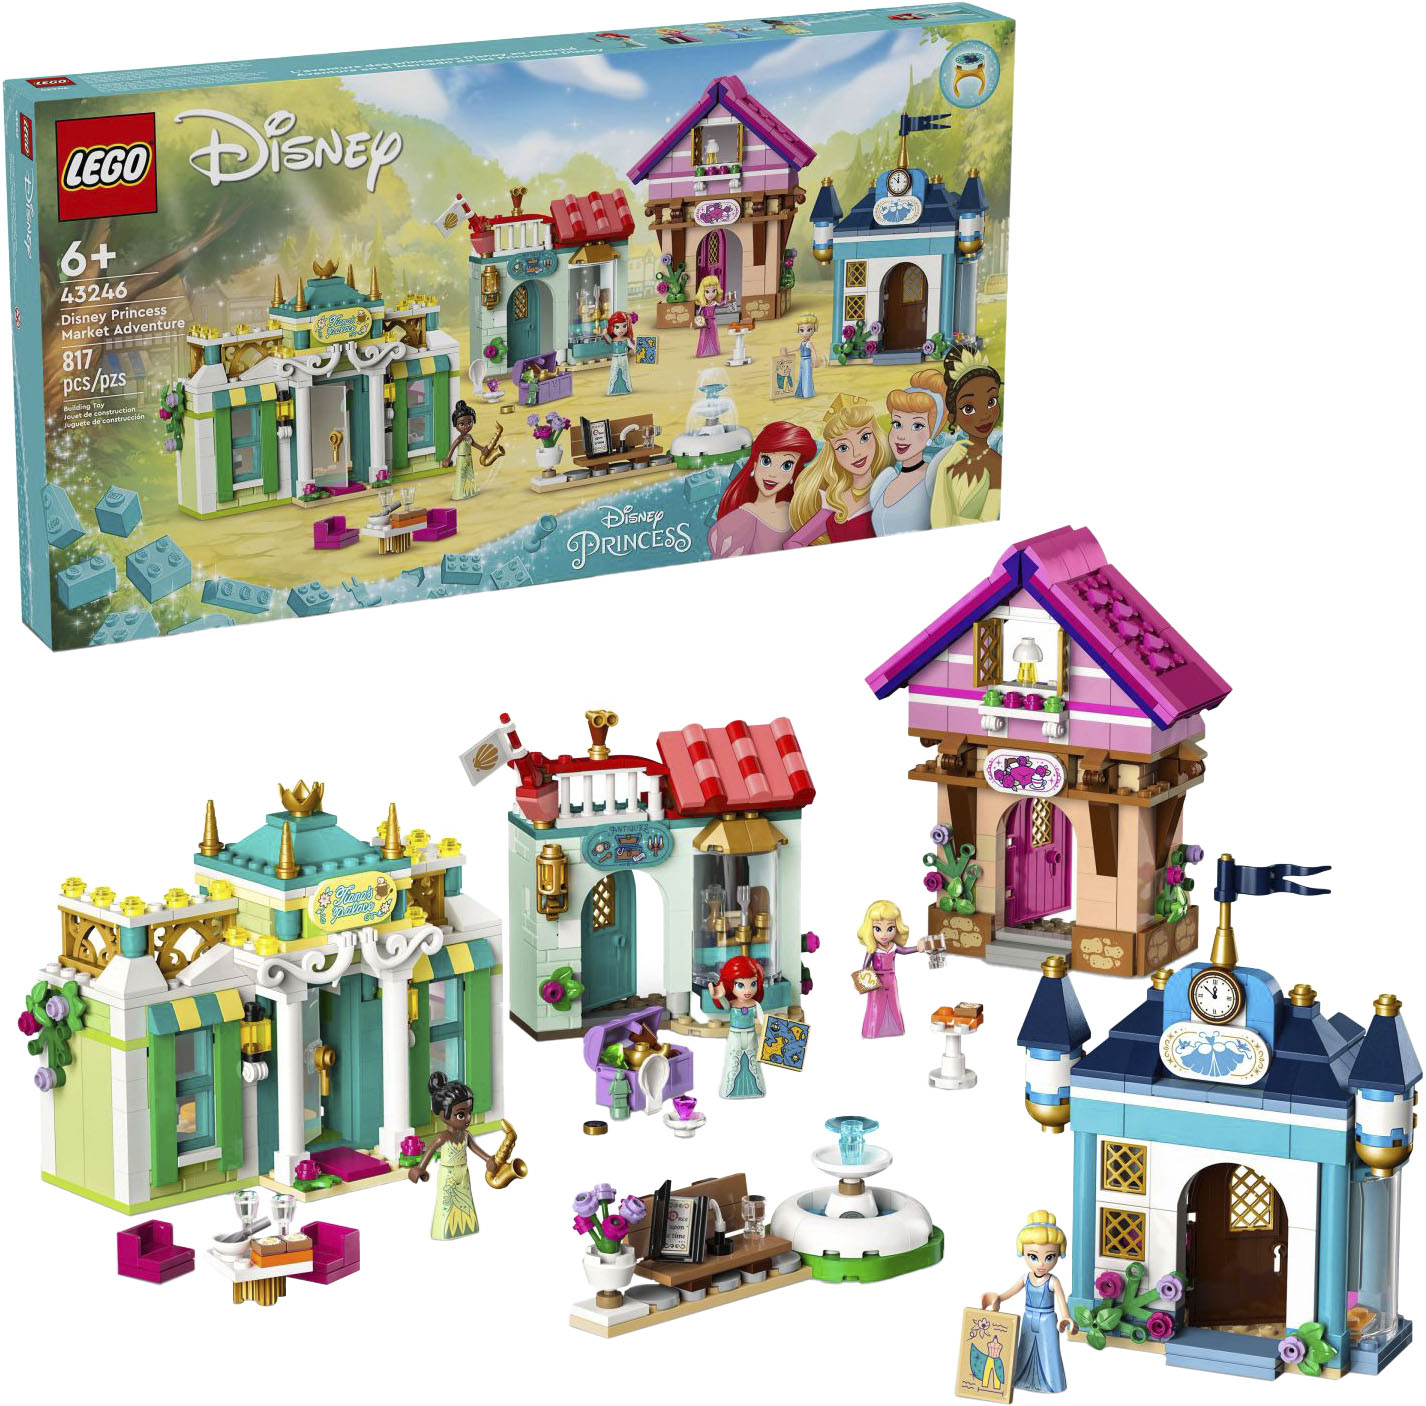 LEGO Disney Princess: Disney Princess Market Adventure Toy Set 43246  6470737 - Best Buy